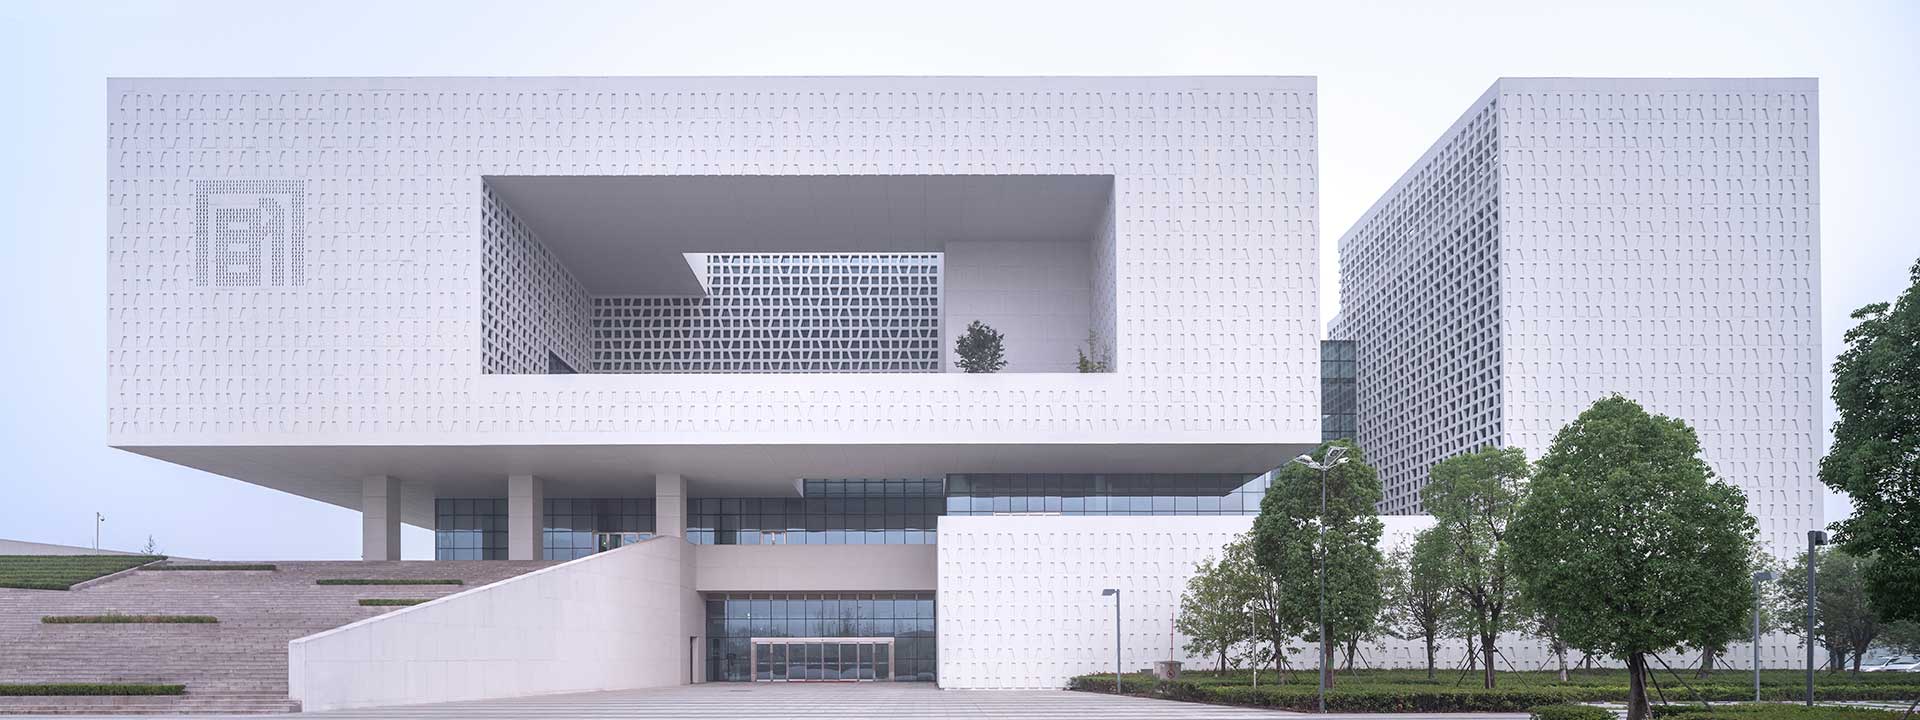 Suzhou-planning-exhibition-hall-1